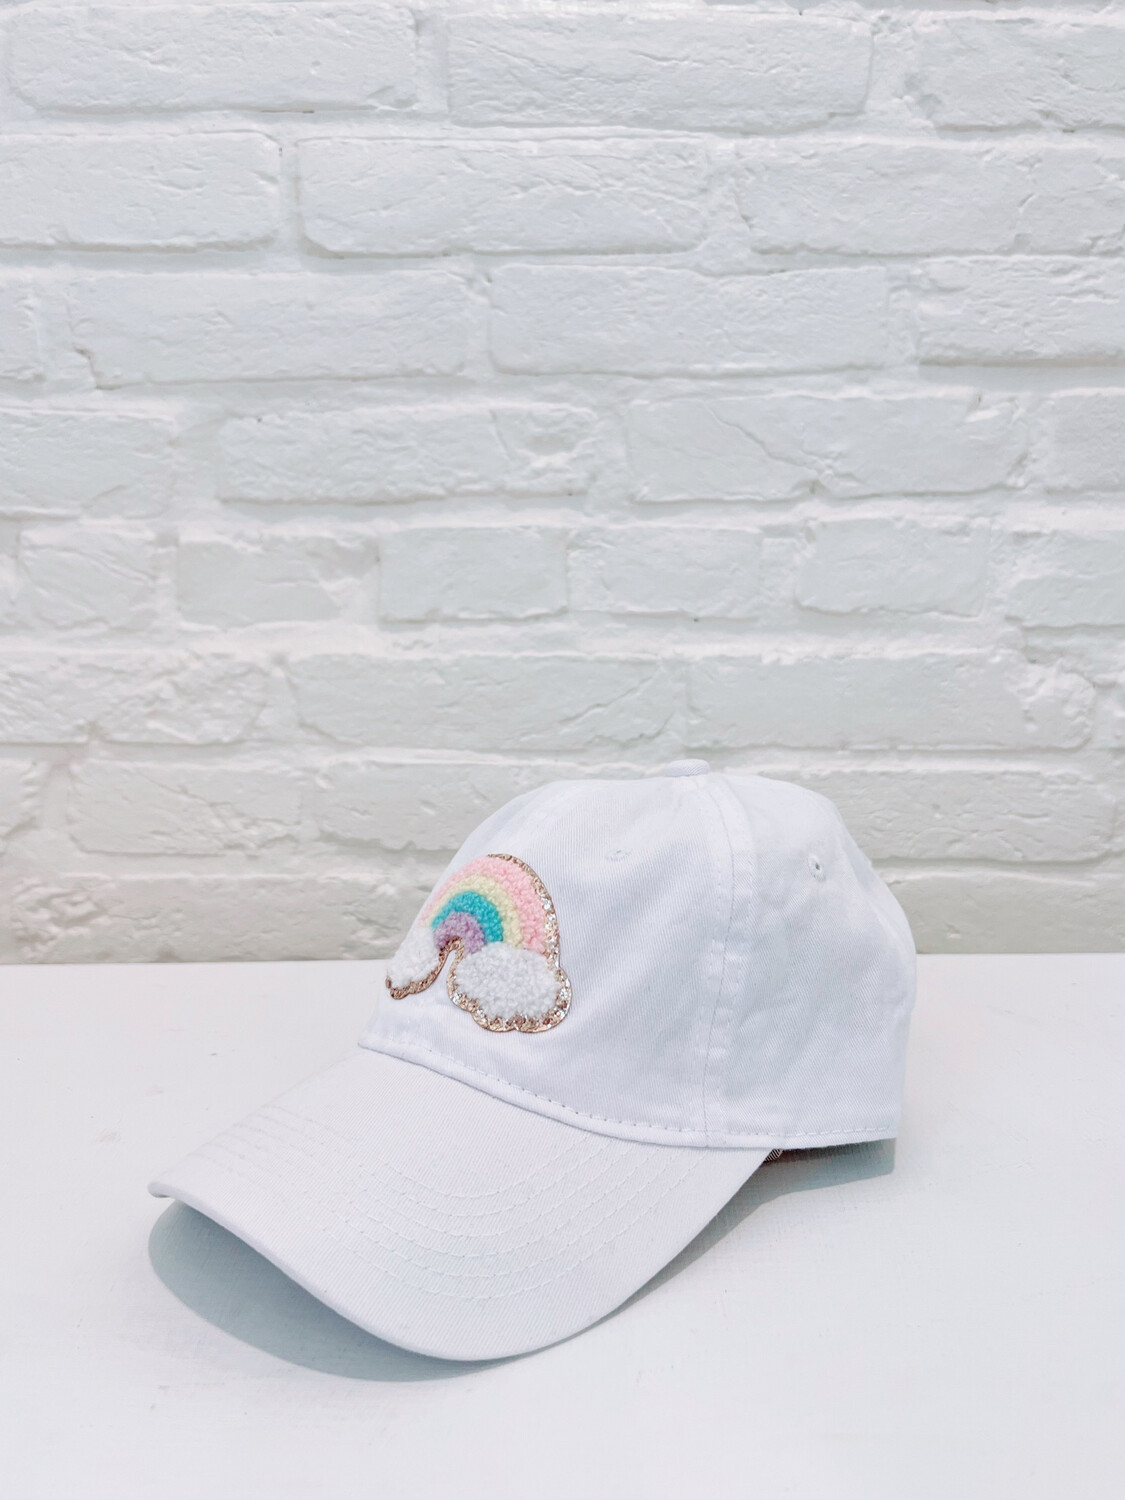 Thistle & Sage Creative Fuzzy Rainbow Patch Ball Cap - Adjustable Size